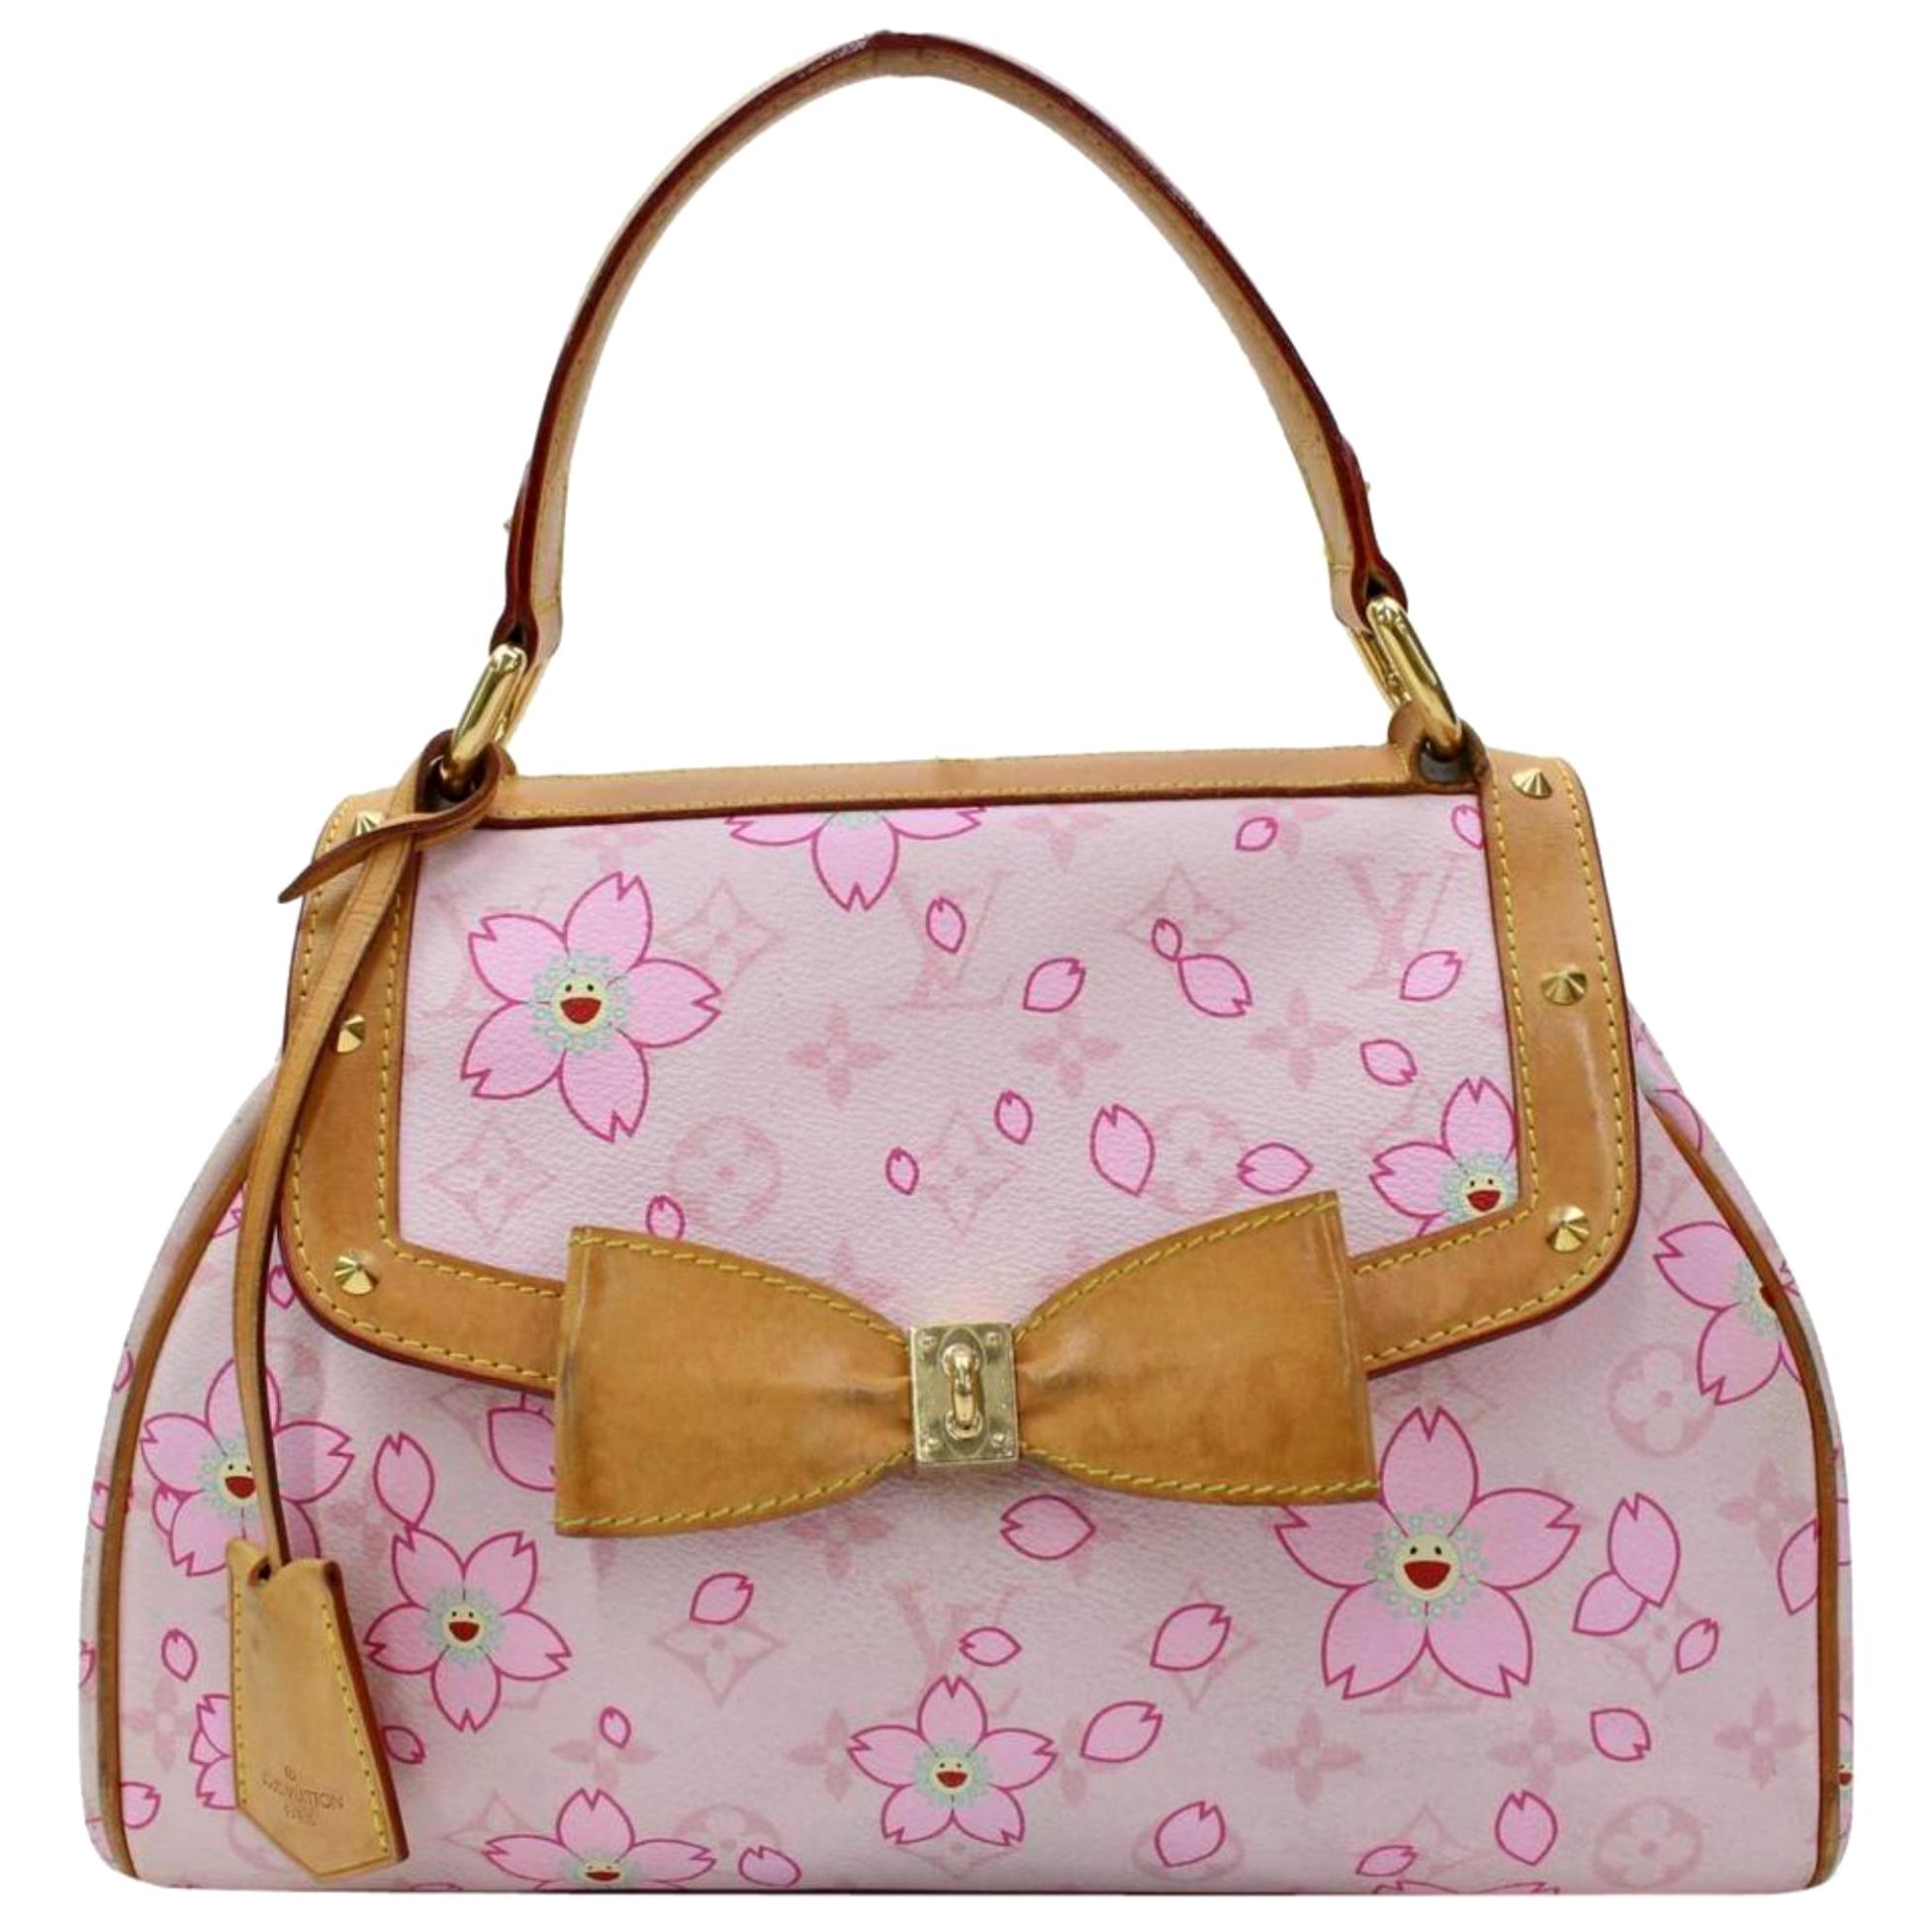 Louis Vuitton Cherry Blossom Sac Retro 867220 Pink Coated Canvas satchel